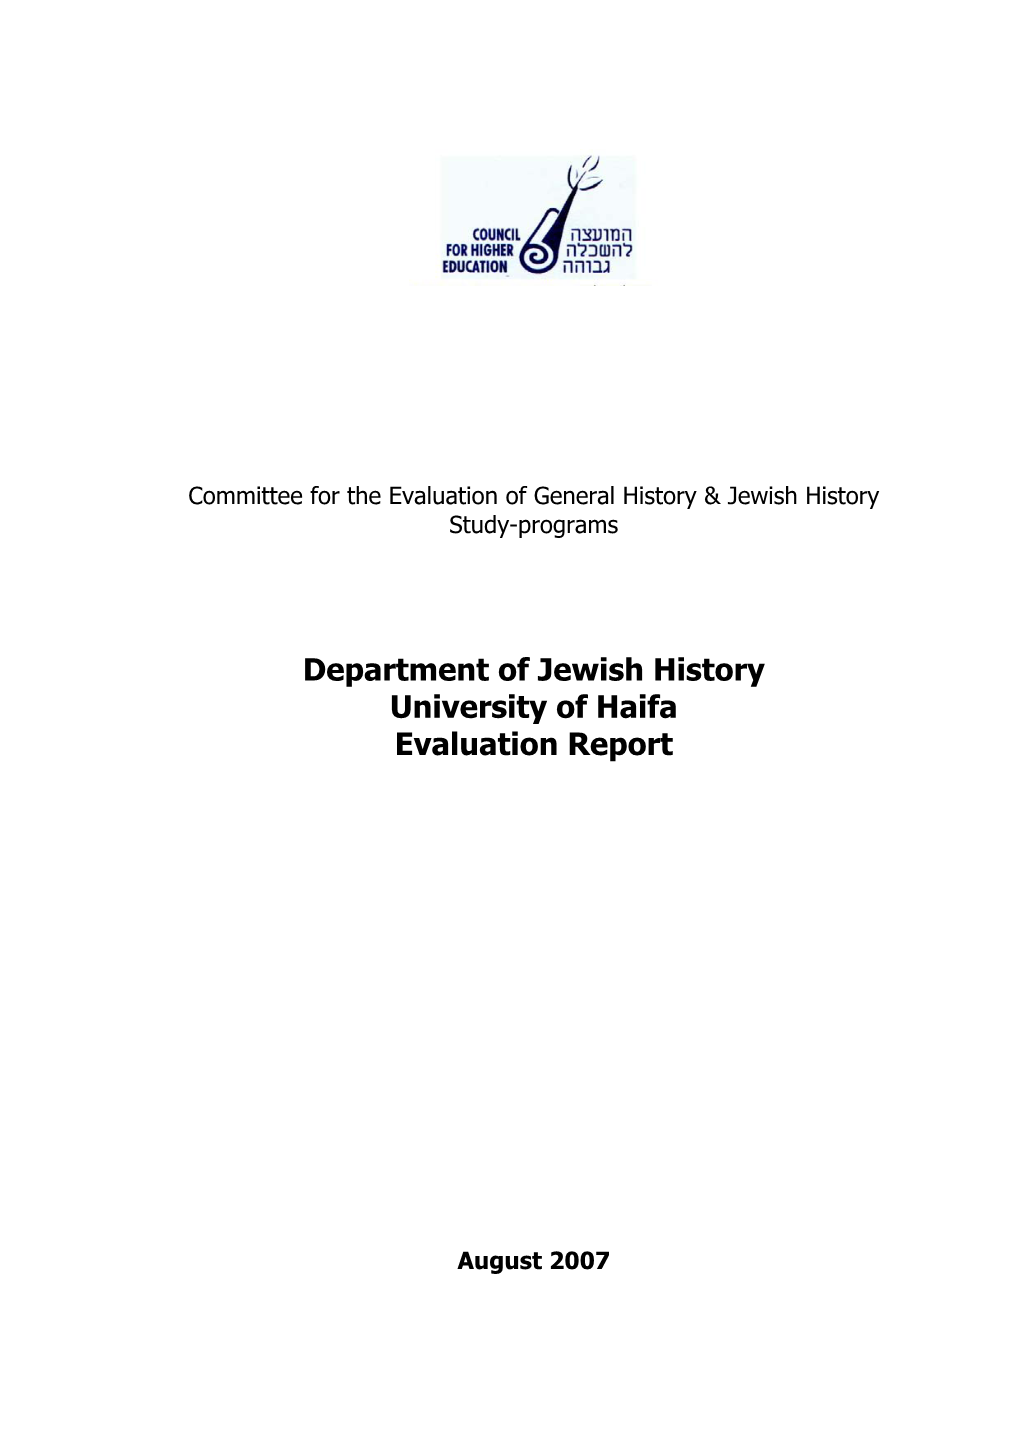 Department of Jewish History University of Haifa Evaluation Report